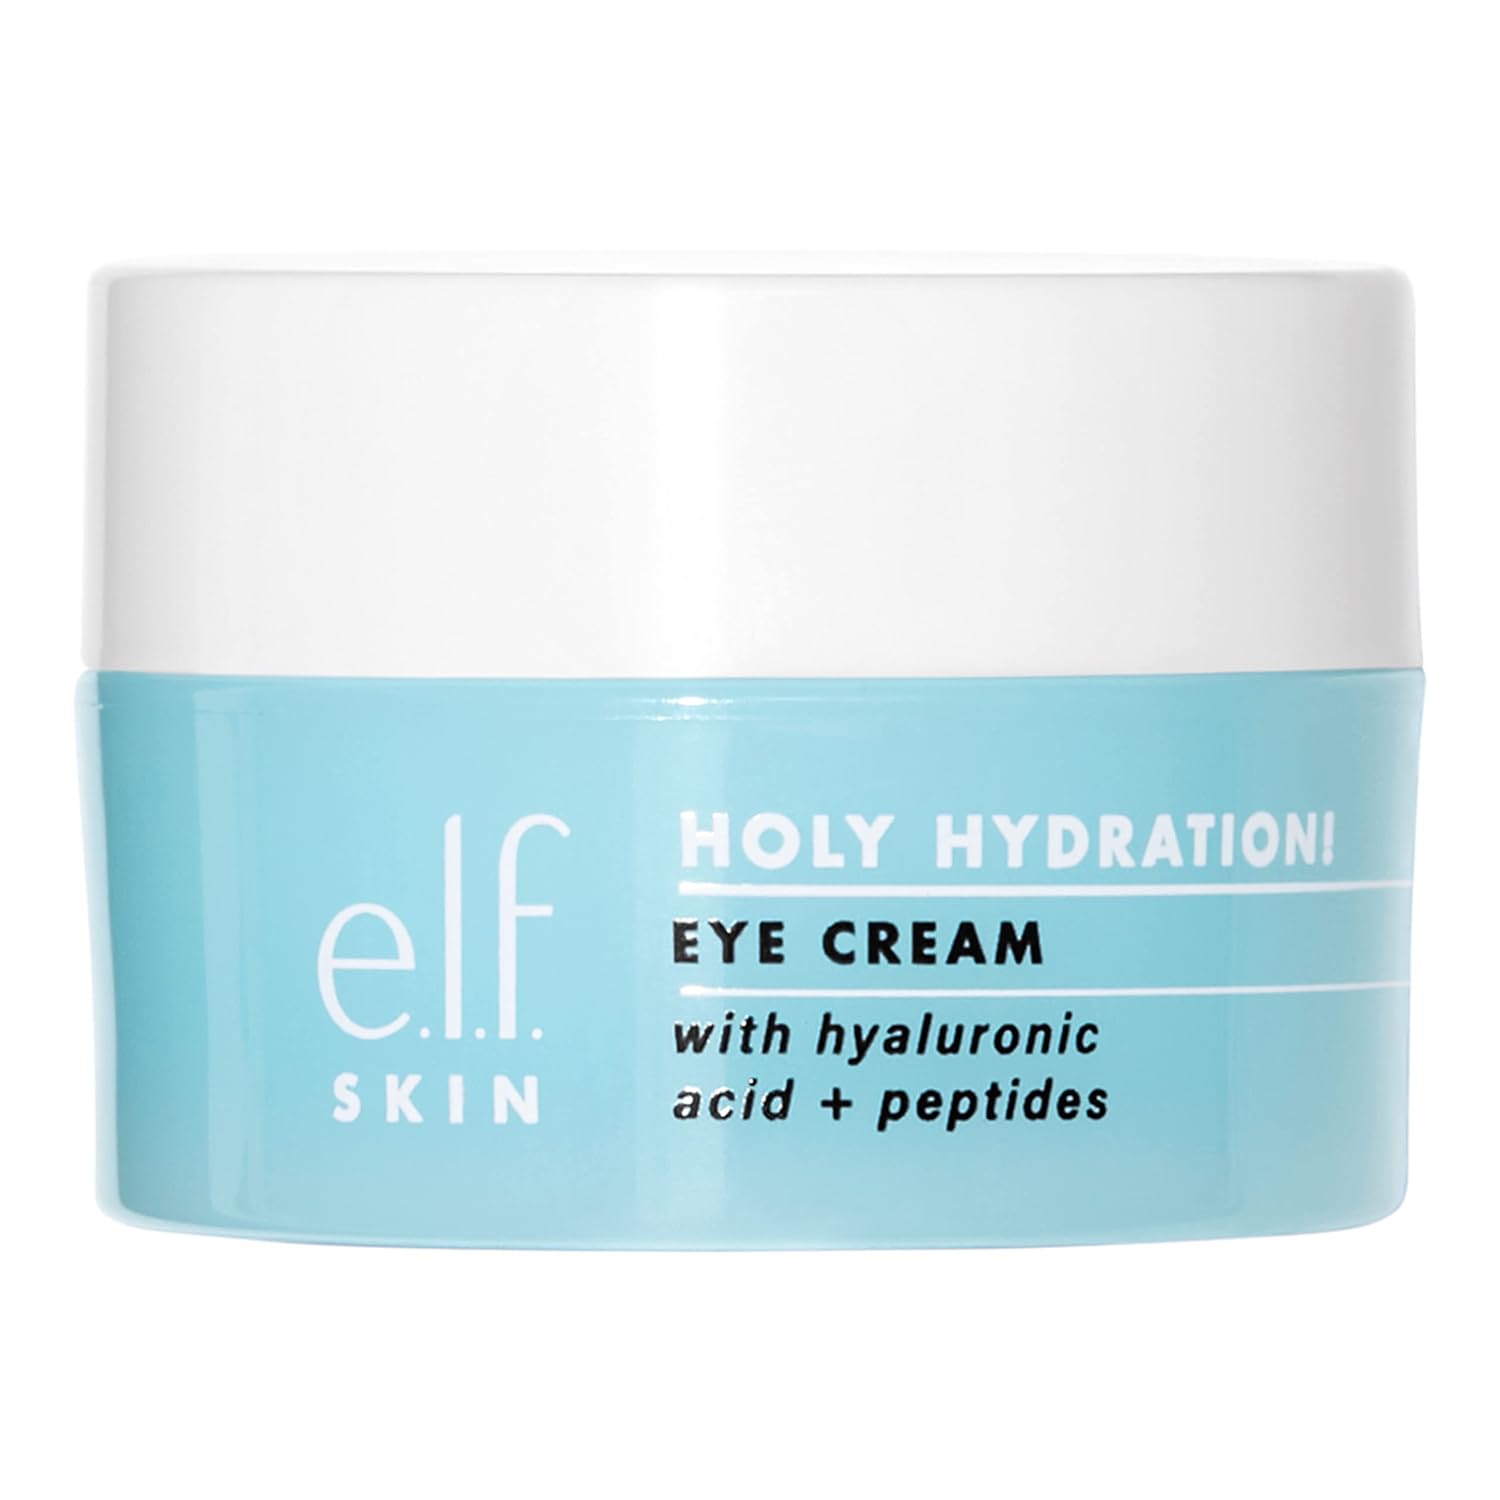 eleven. Skin Holy Hydation! Eye Cream, Cream to Minimise Dark Circles, with Hyaluronic Acid and Peptides, Vegan & Cruethy Free, 15 g